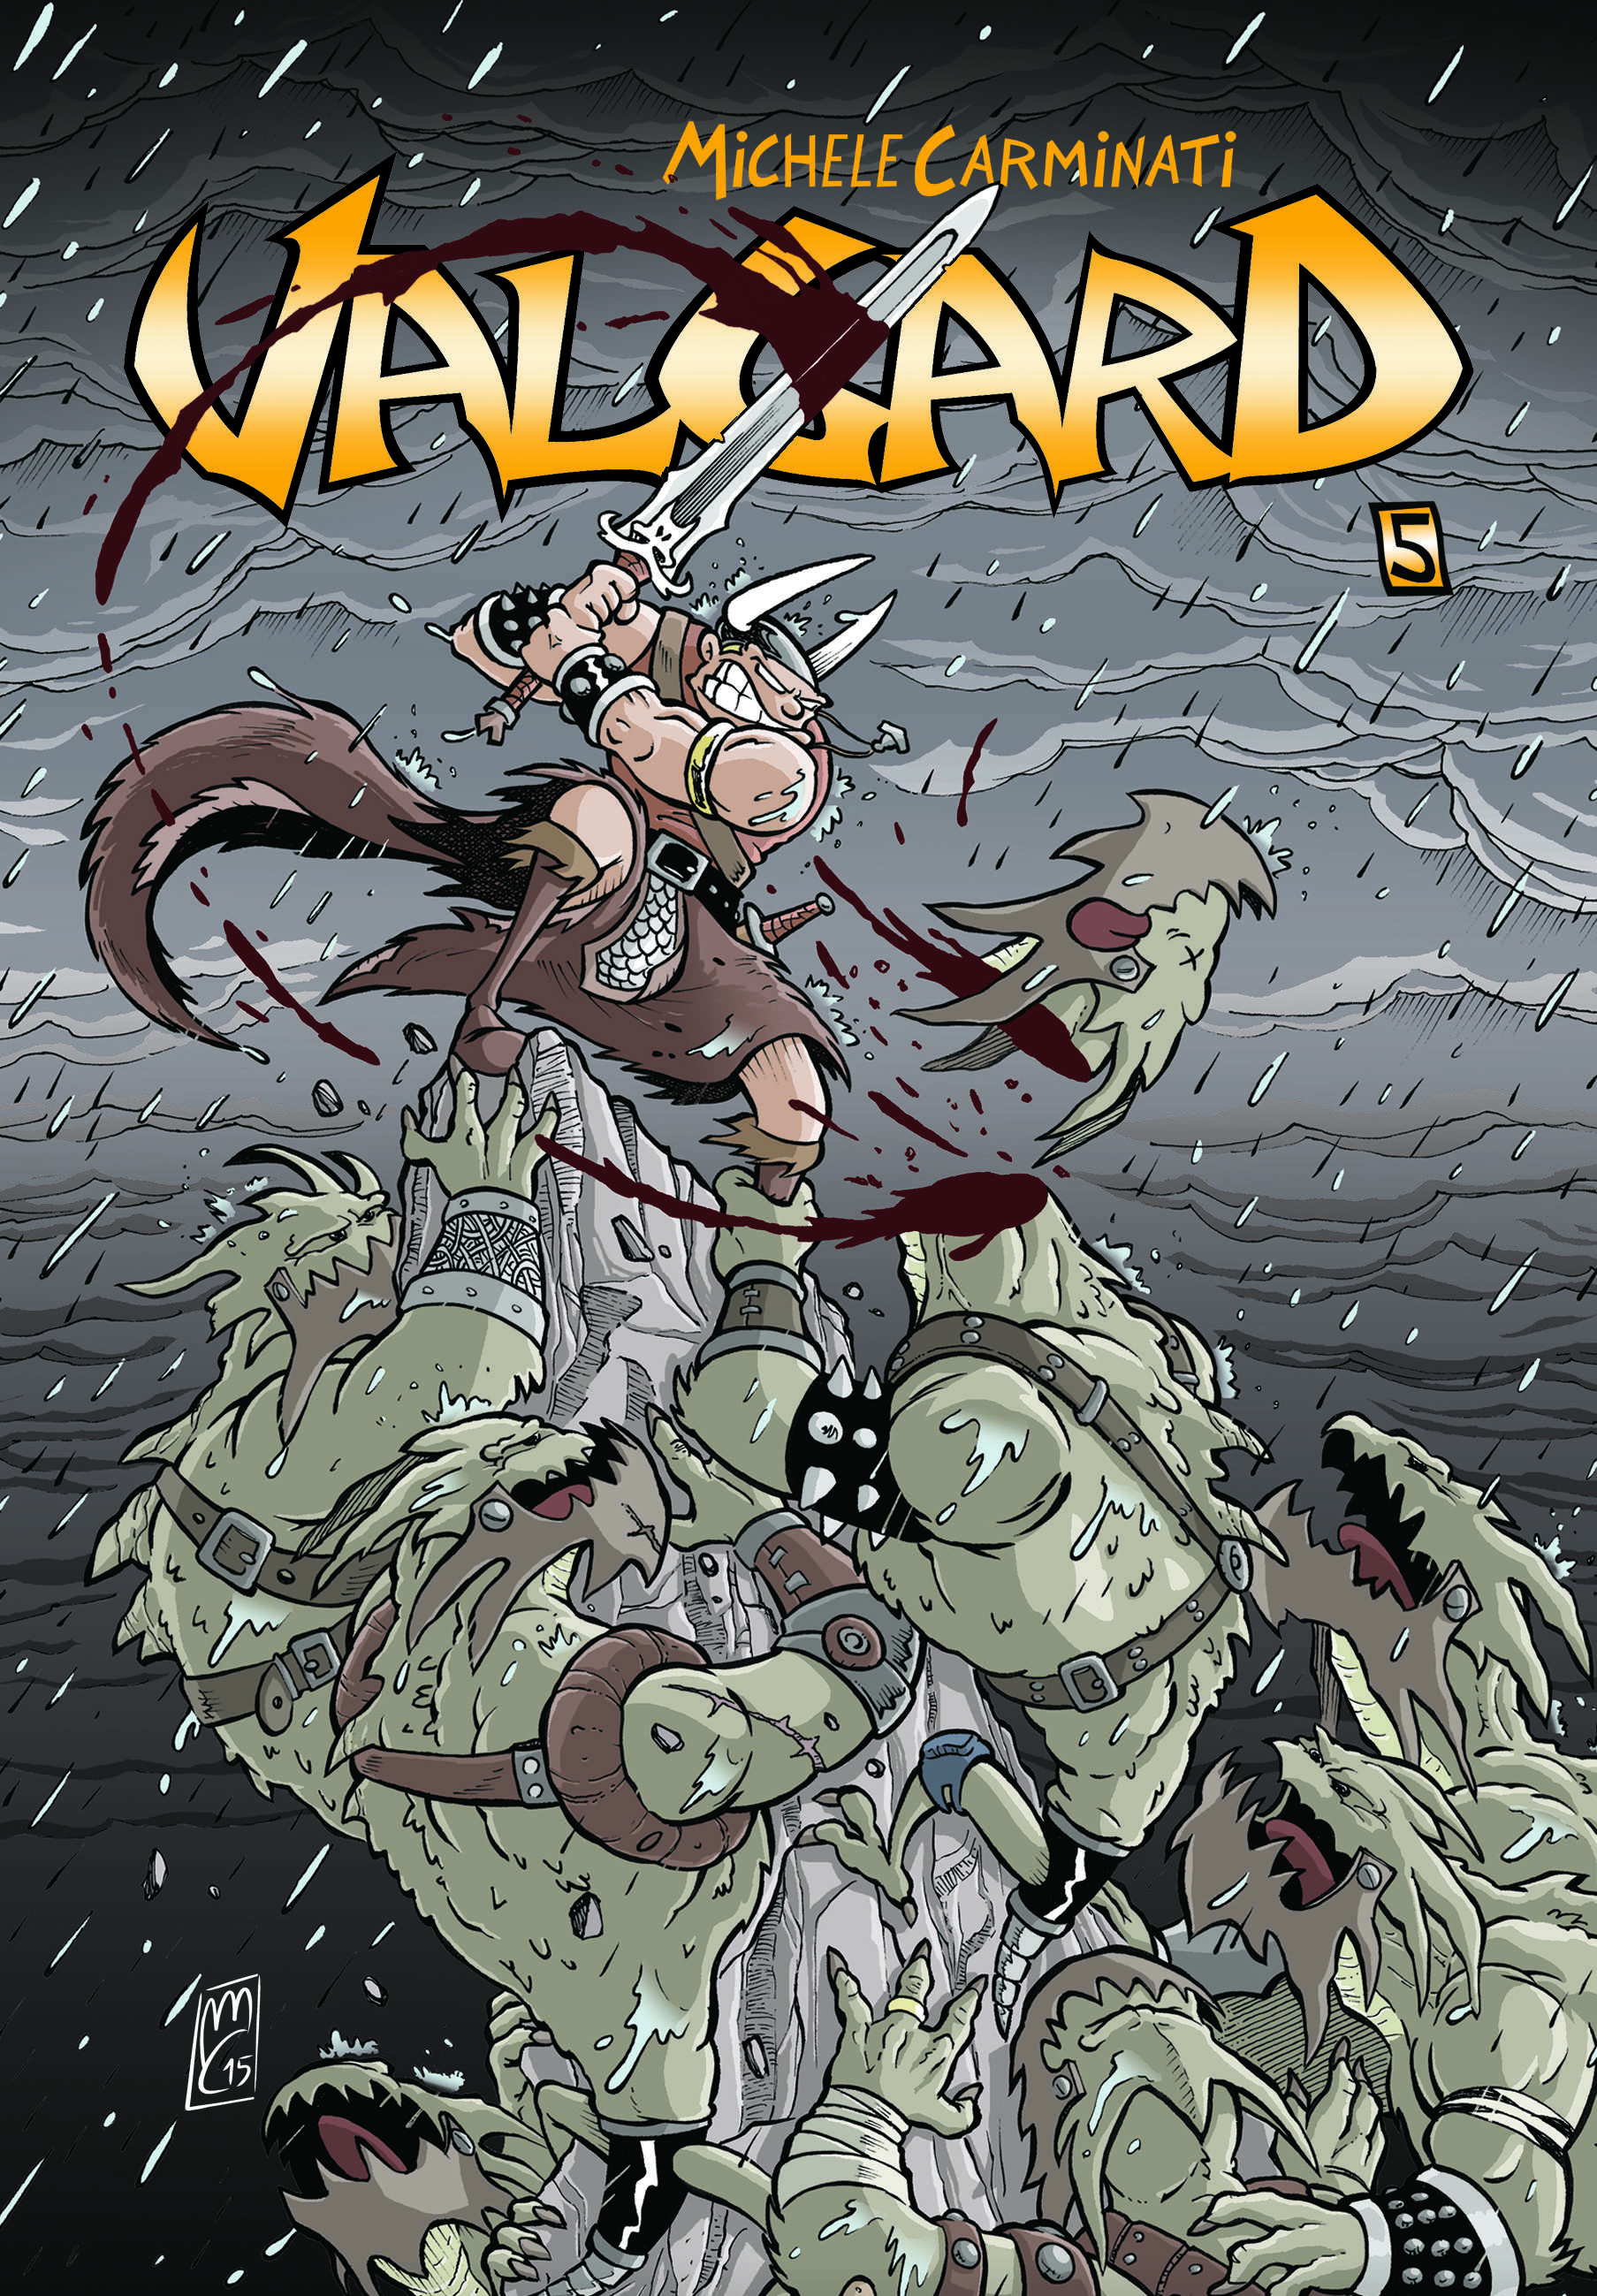 Valgard vol. 5